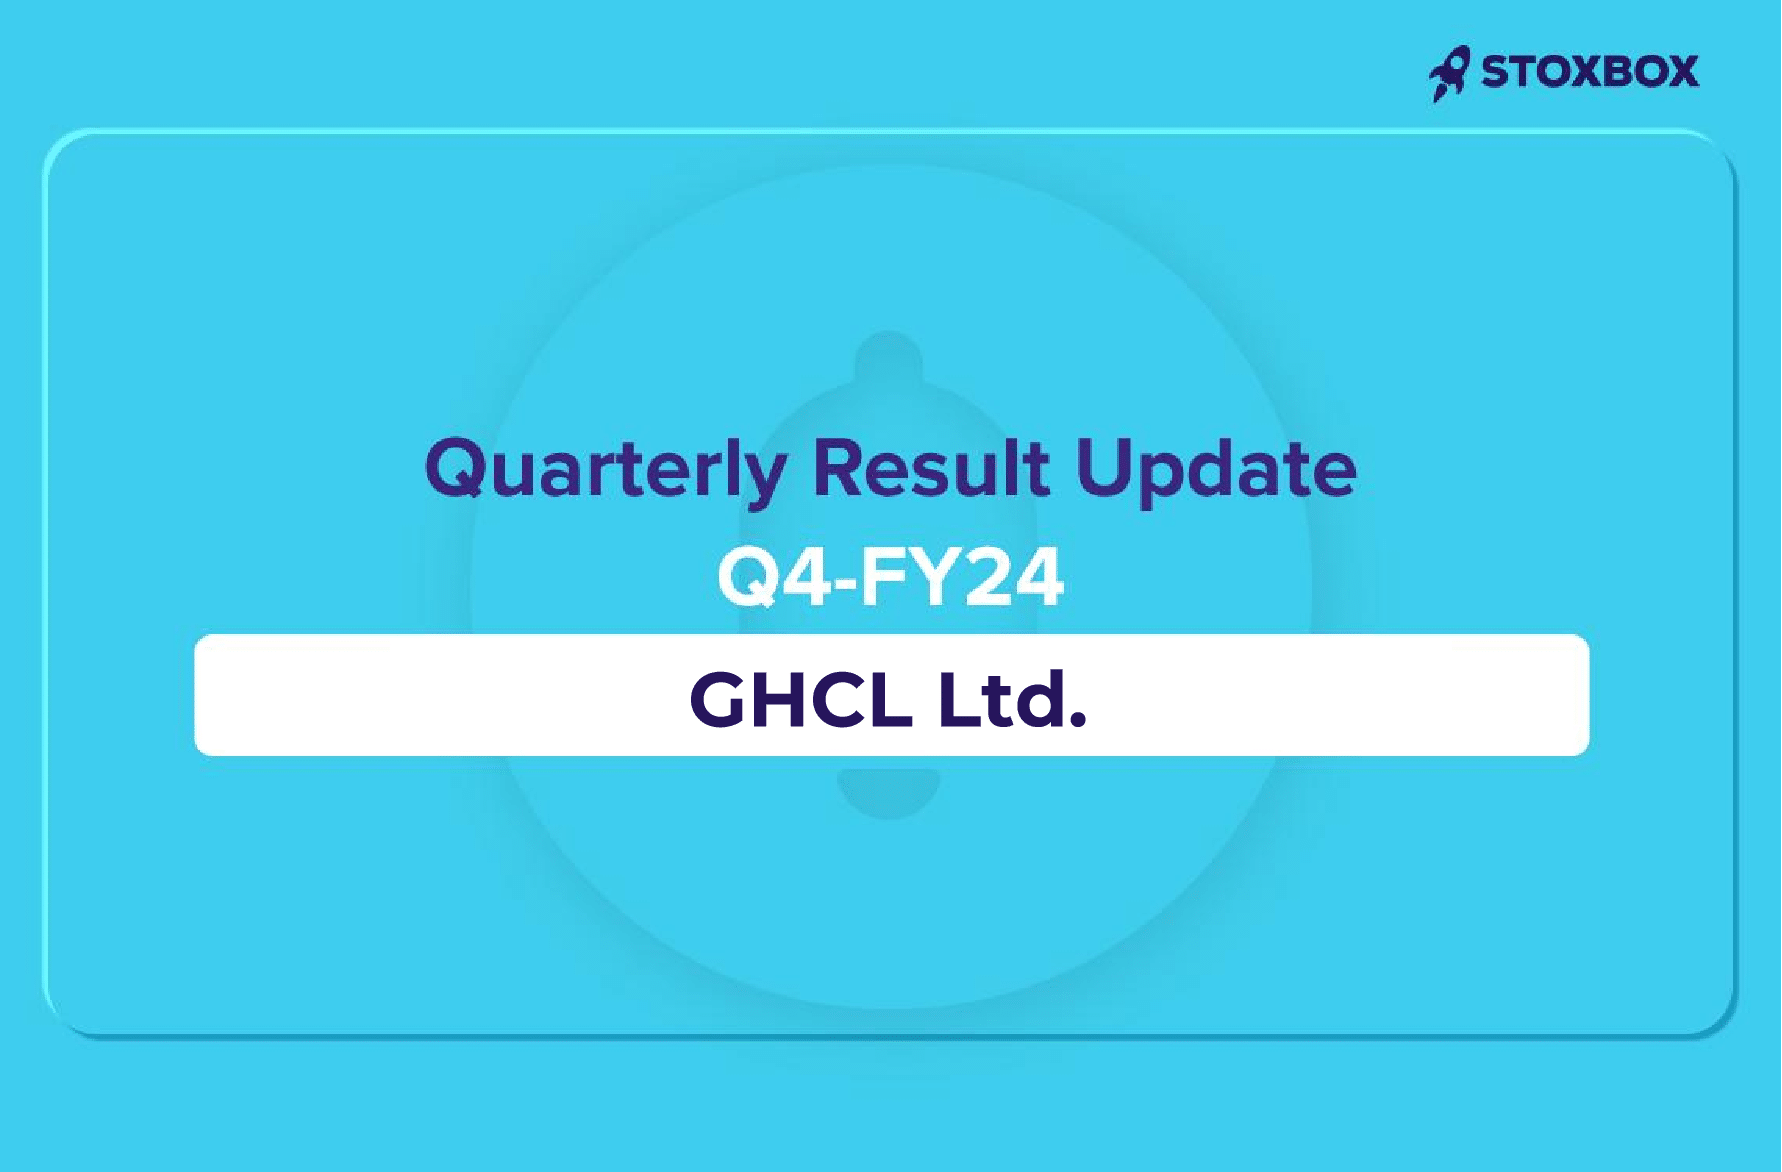 Gujarat Heavy Chemicals Ltd (GHCL Ltd) quarterly results